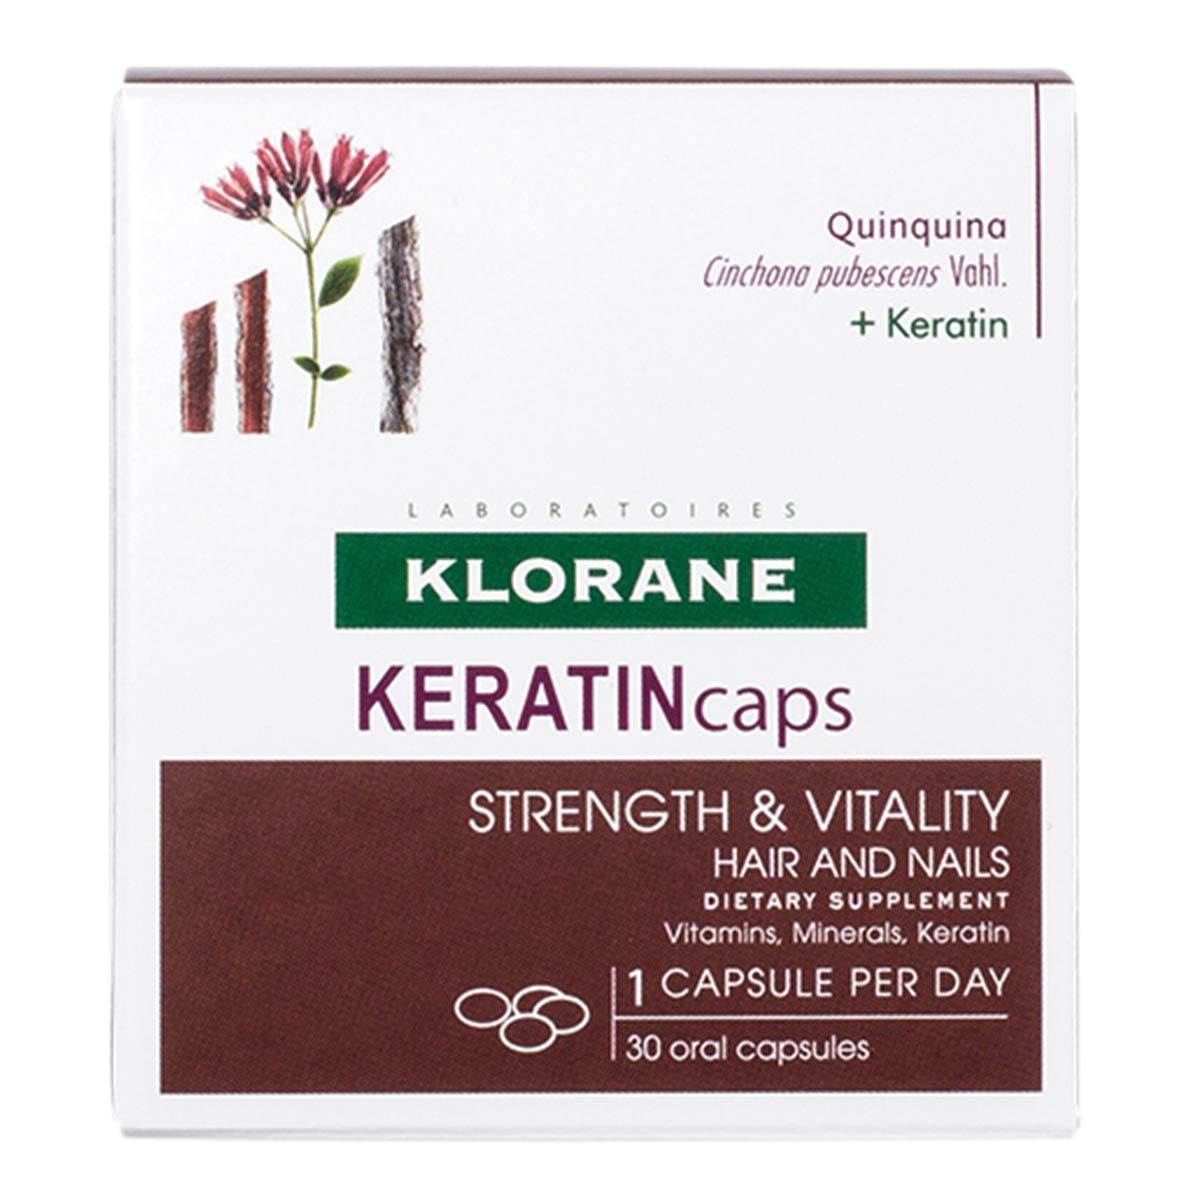 Primary image of Keratincaps